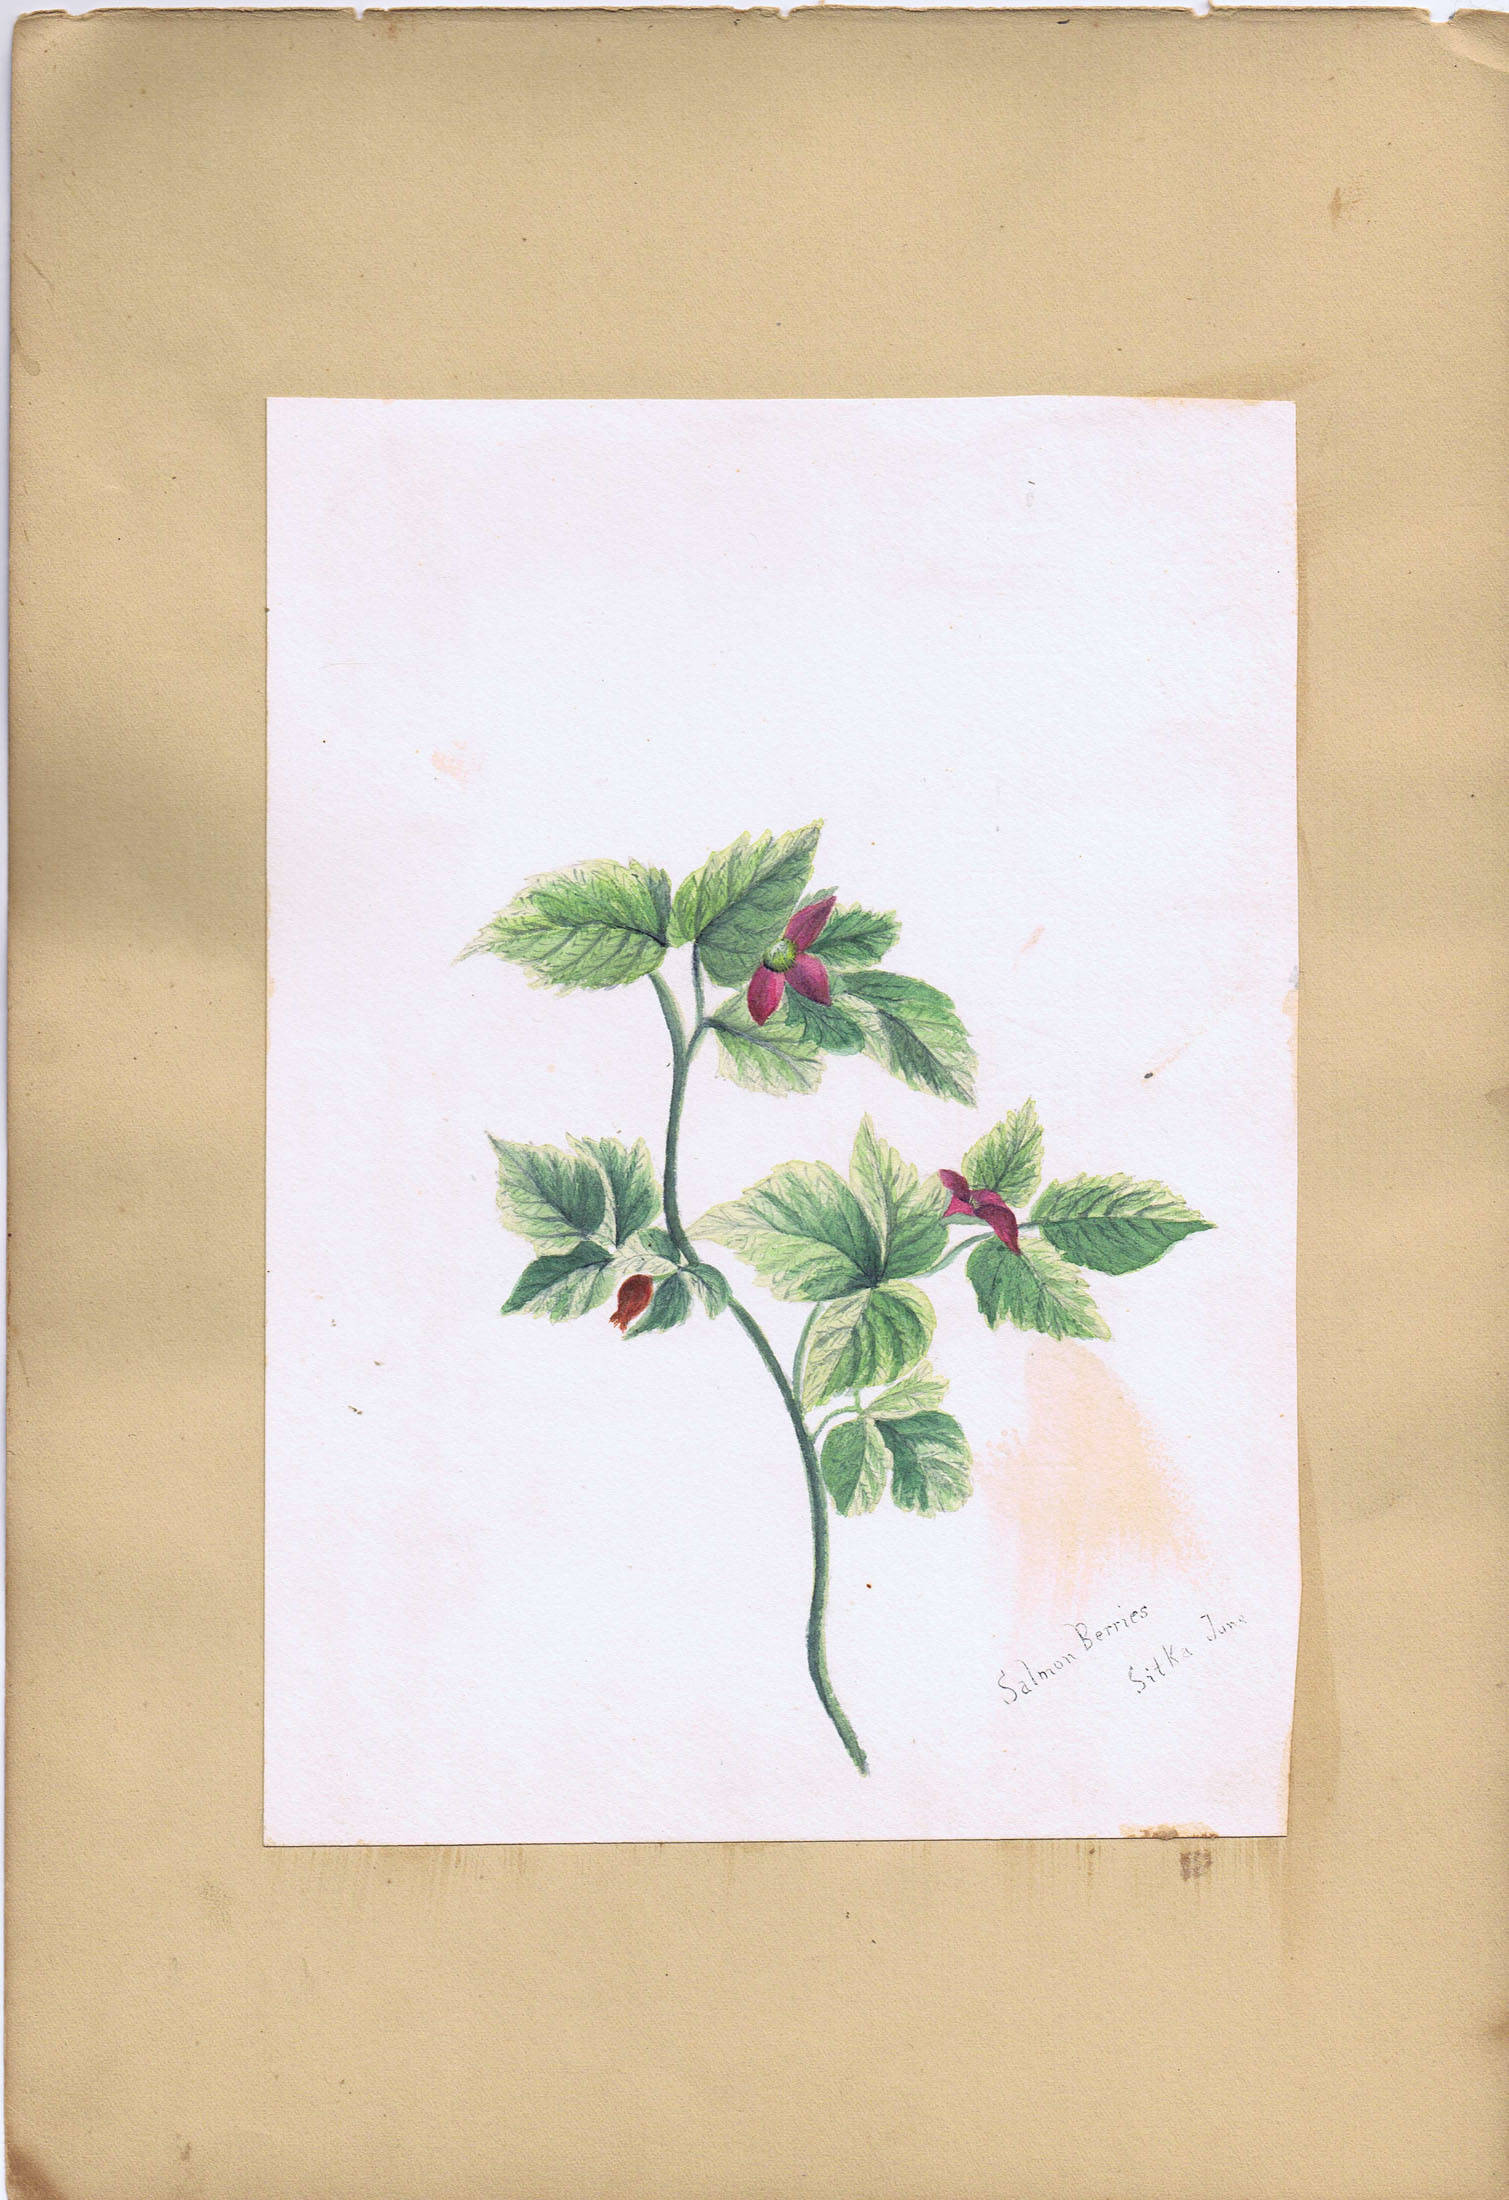 Paulina Cohen (1859-1941). Salmon Berries, Sitka, June. Watercolor. Museum purchase, 86.252.33.